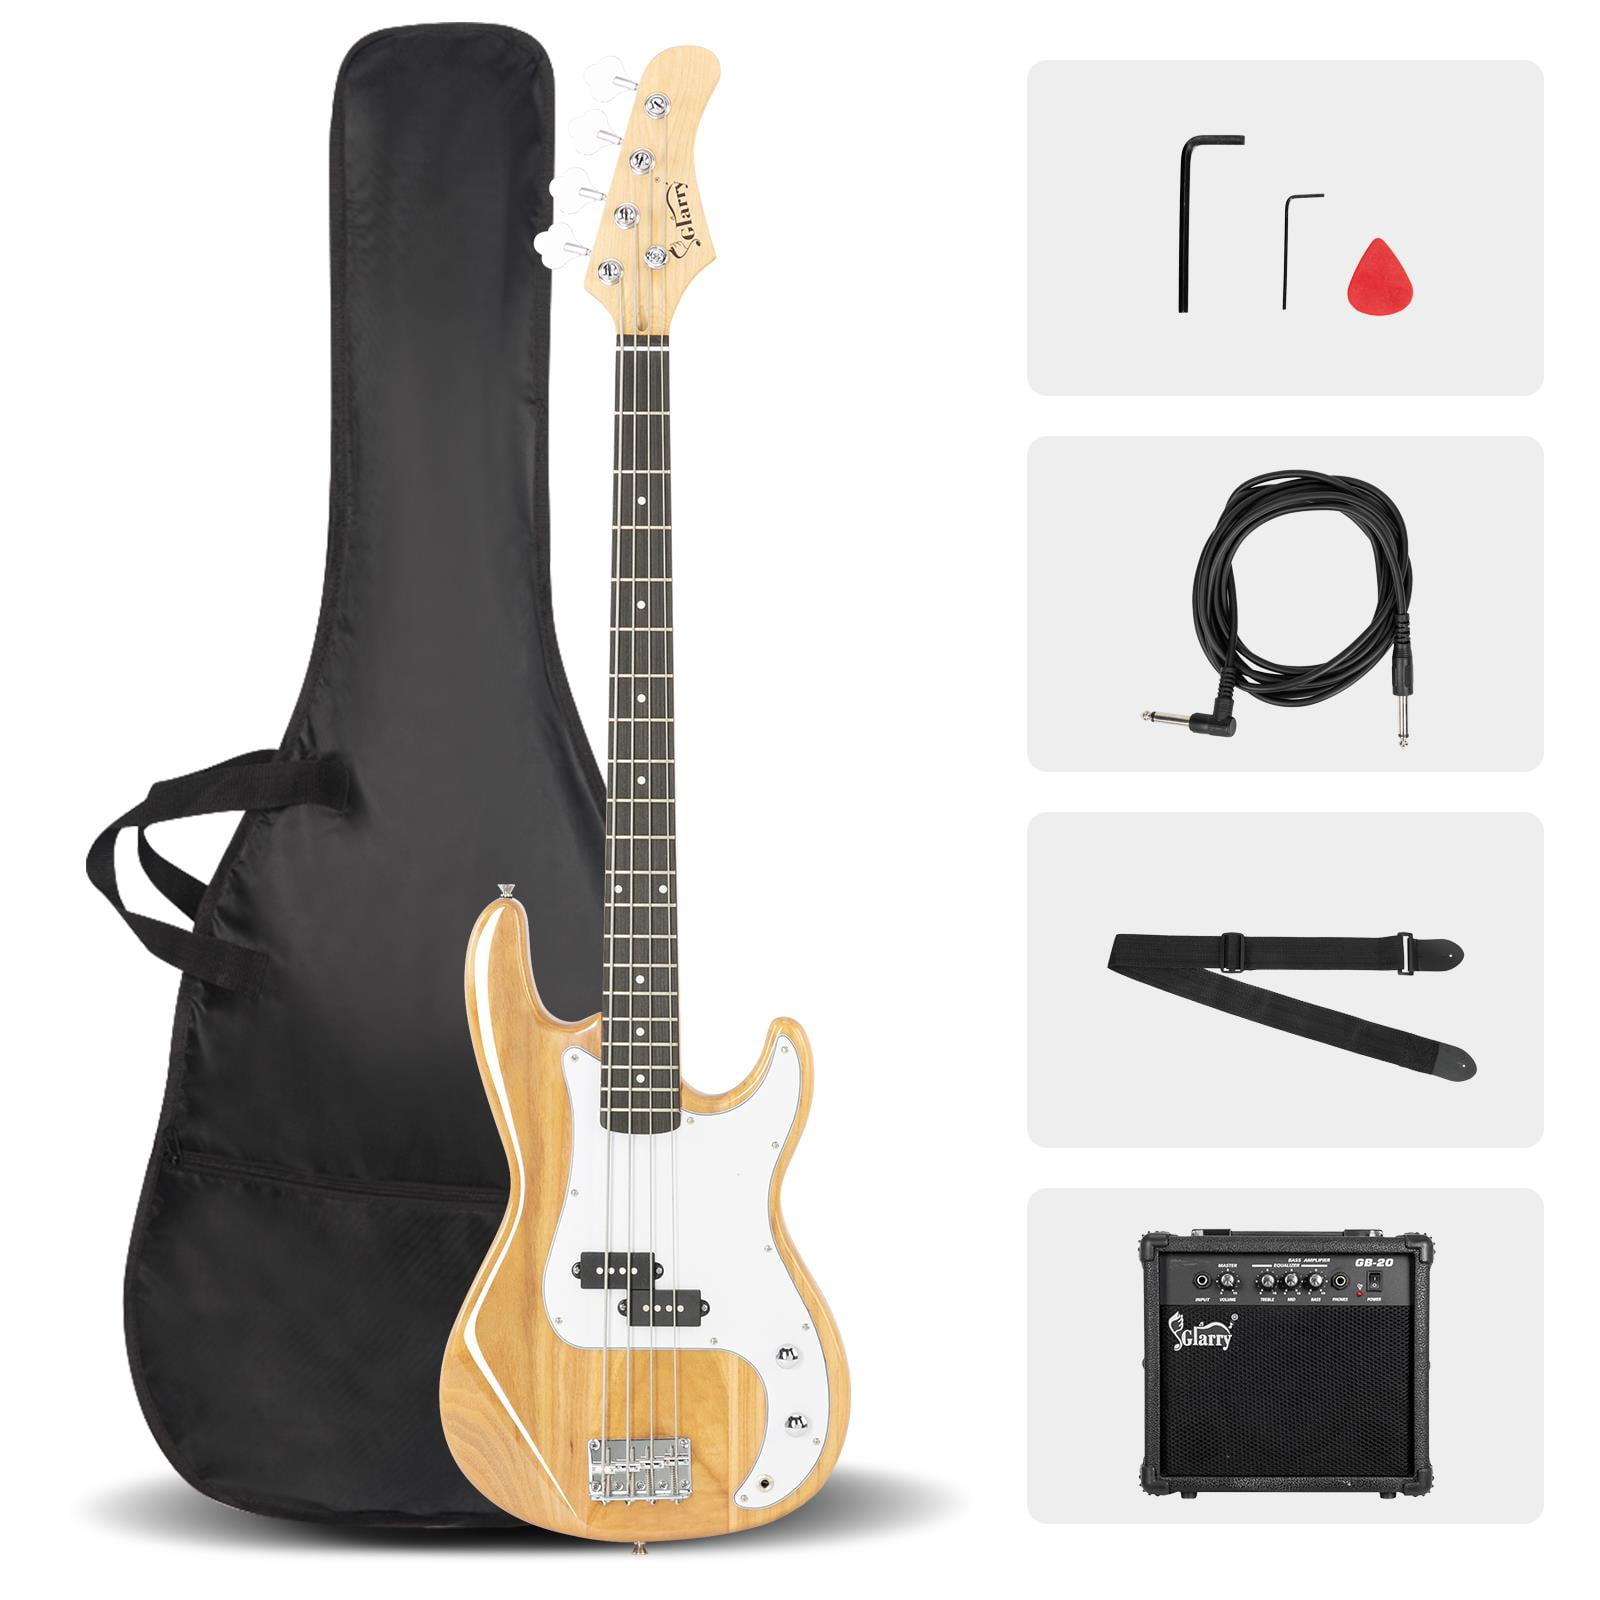 Special Cute Ferret Guitar Picks 6 Pack,Suitable For Guitar,Ukulele,Bass,Electric Guitar 